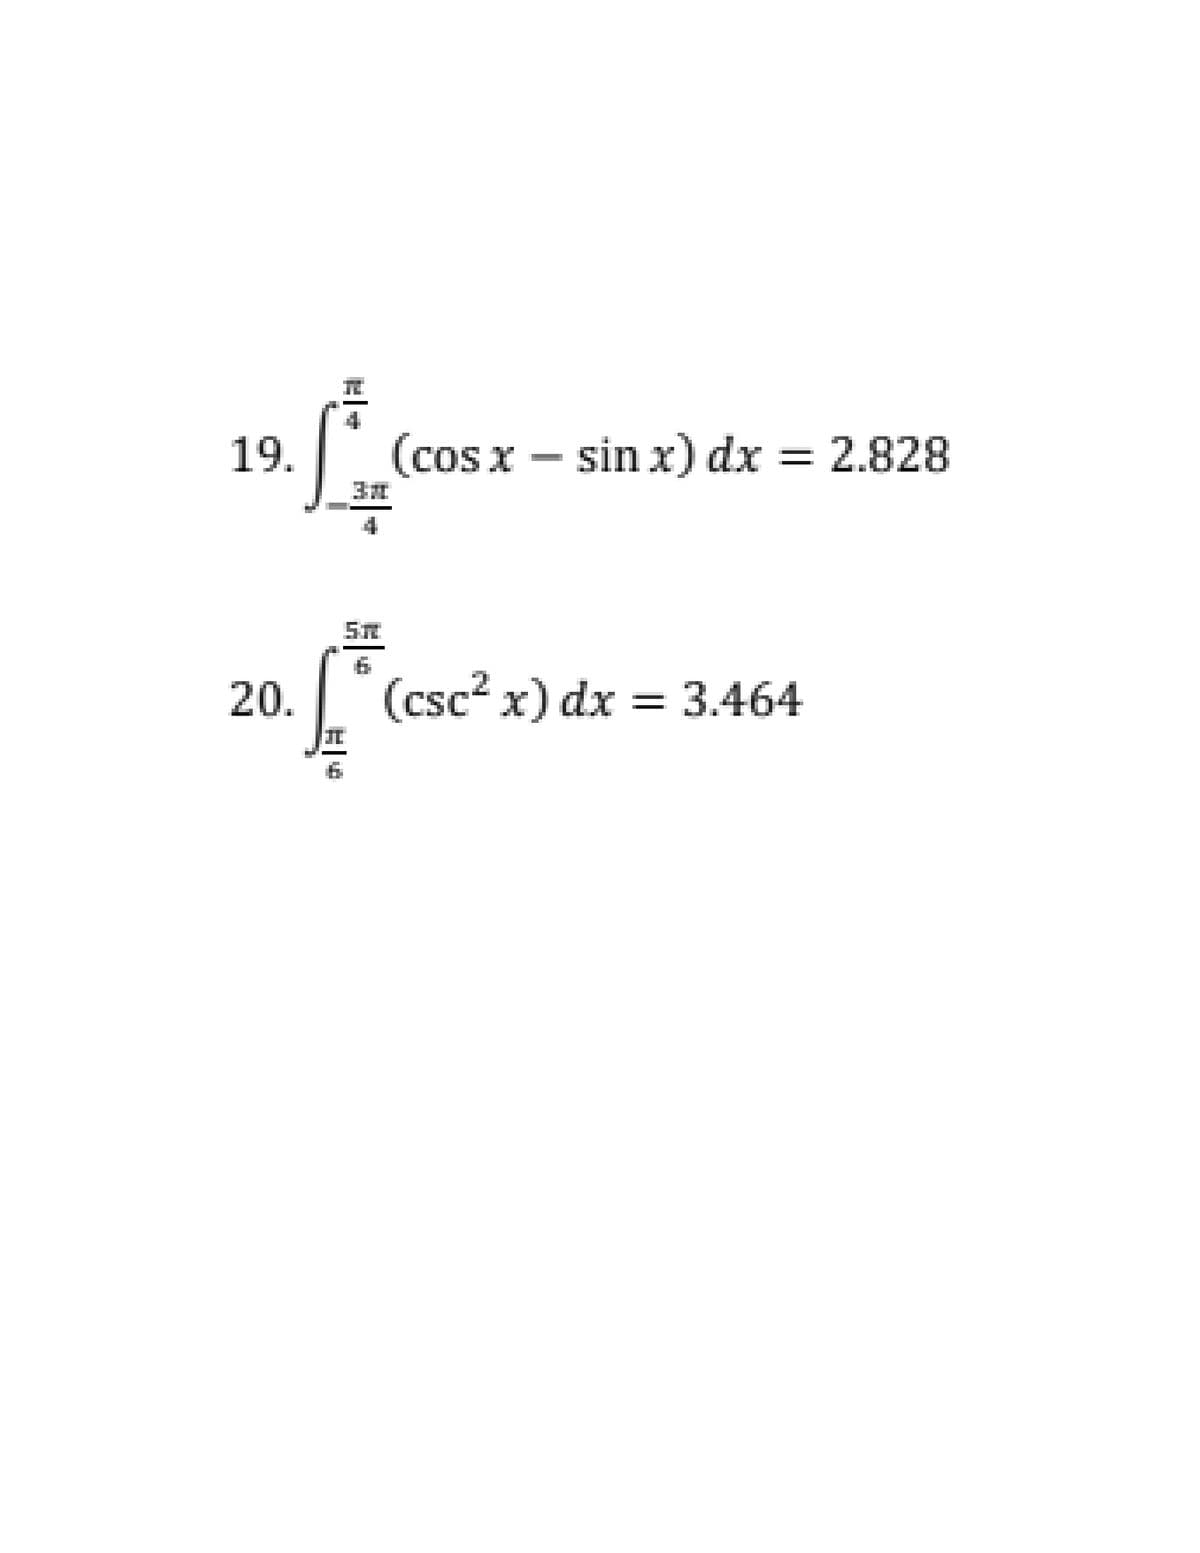 T
(cos x - sin x) dx = 2.828
19.
20.
(csc? x) dx = 3.464
